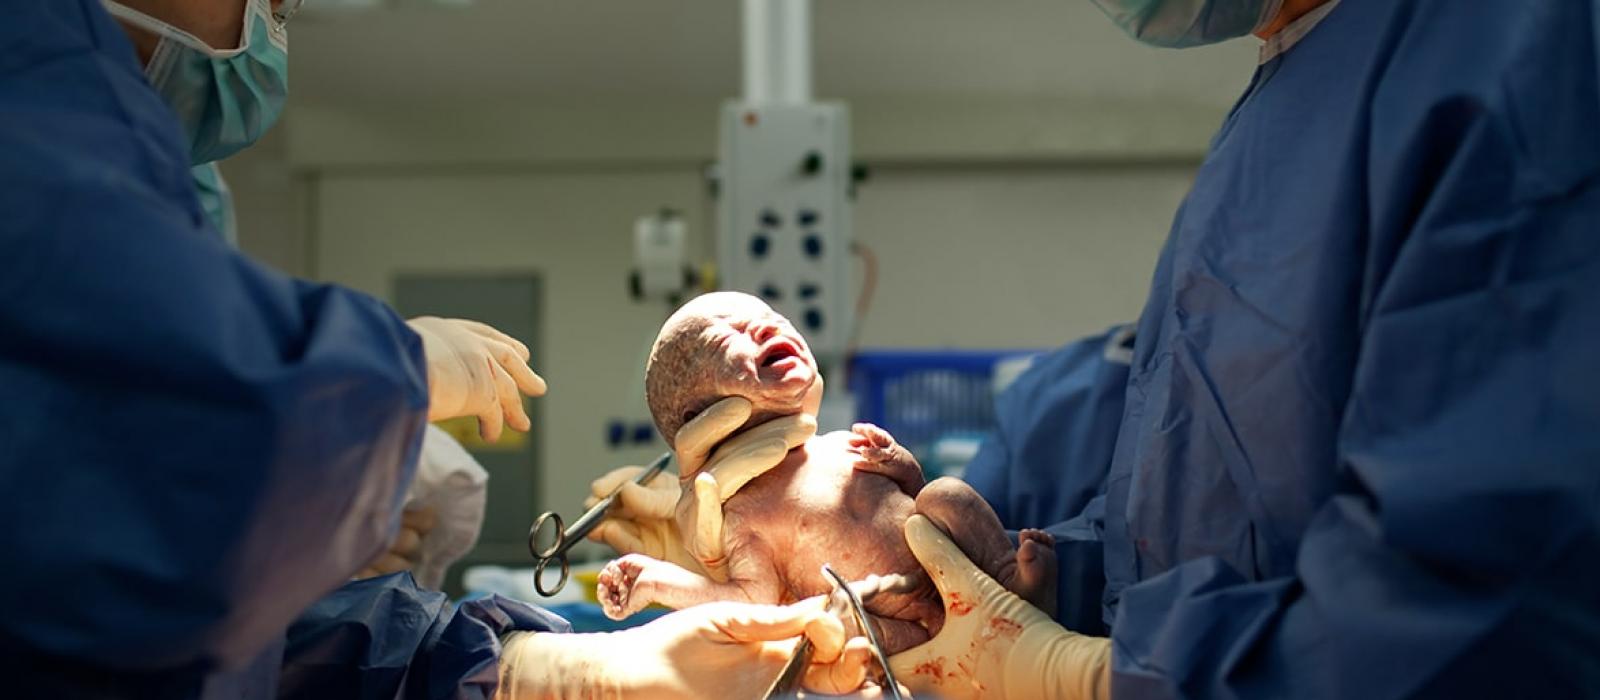 Child Birth Injury